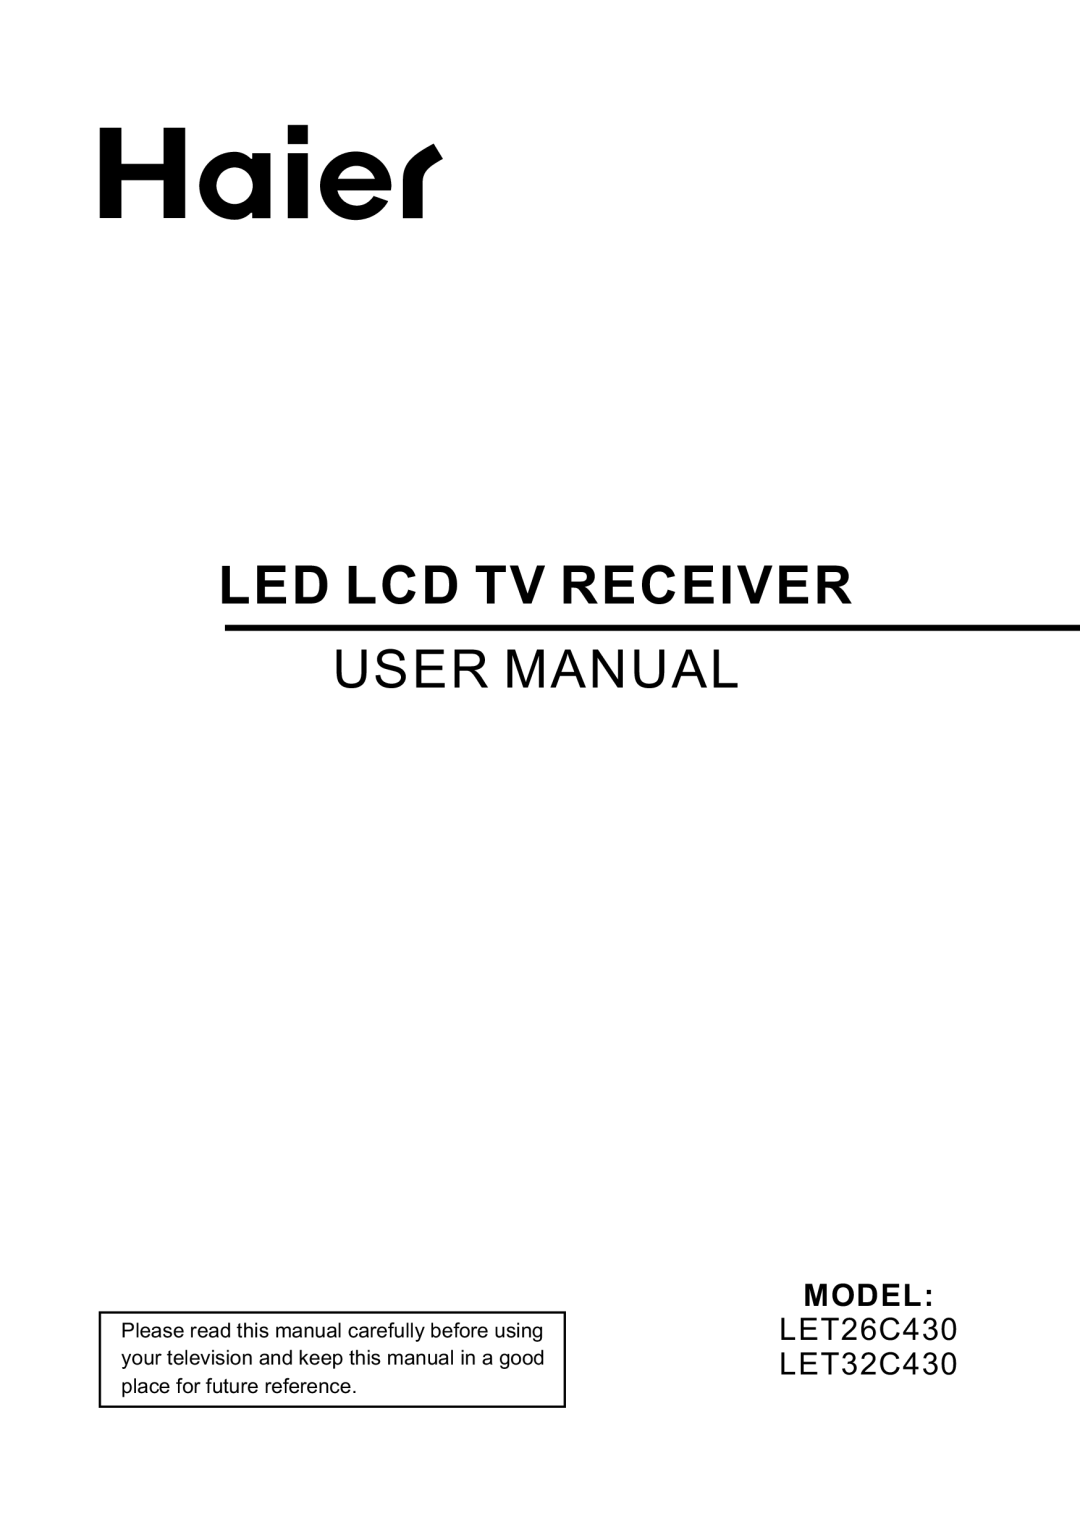 Haier user manual Led Lcd Tv Receiver, User Manual, Model, LET26C430 LET32C430 